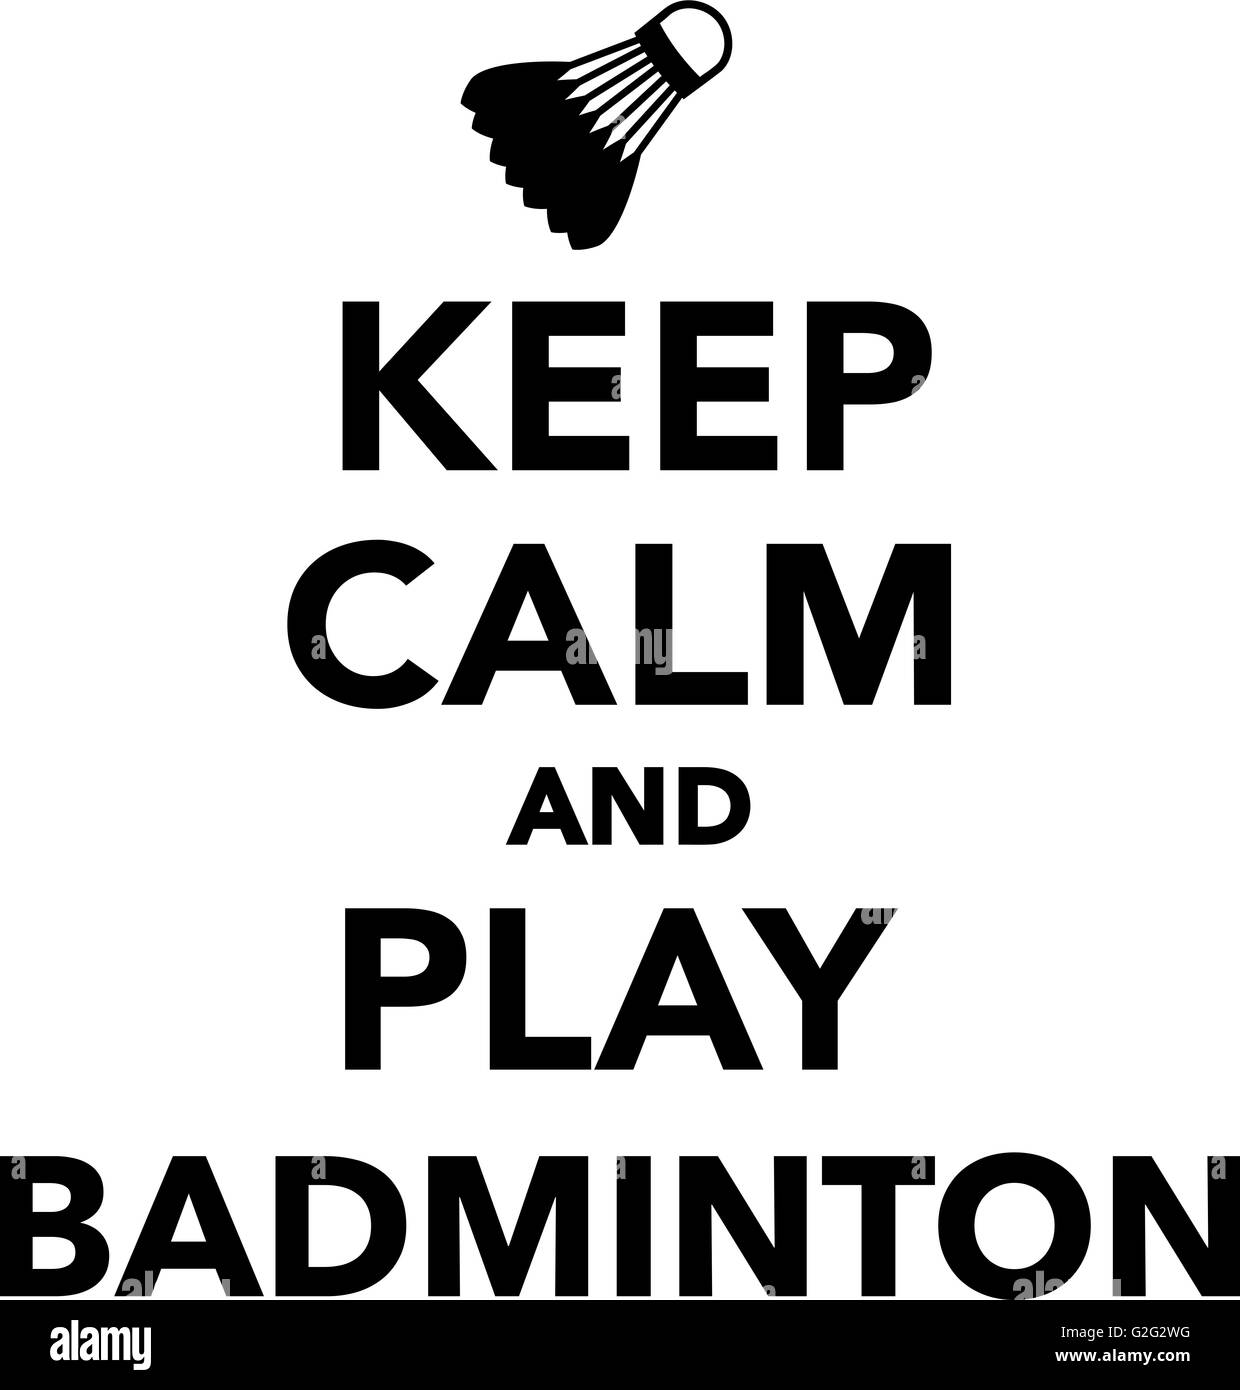 Keep Calm and Play Badminton Stock Photo